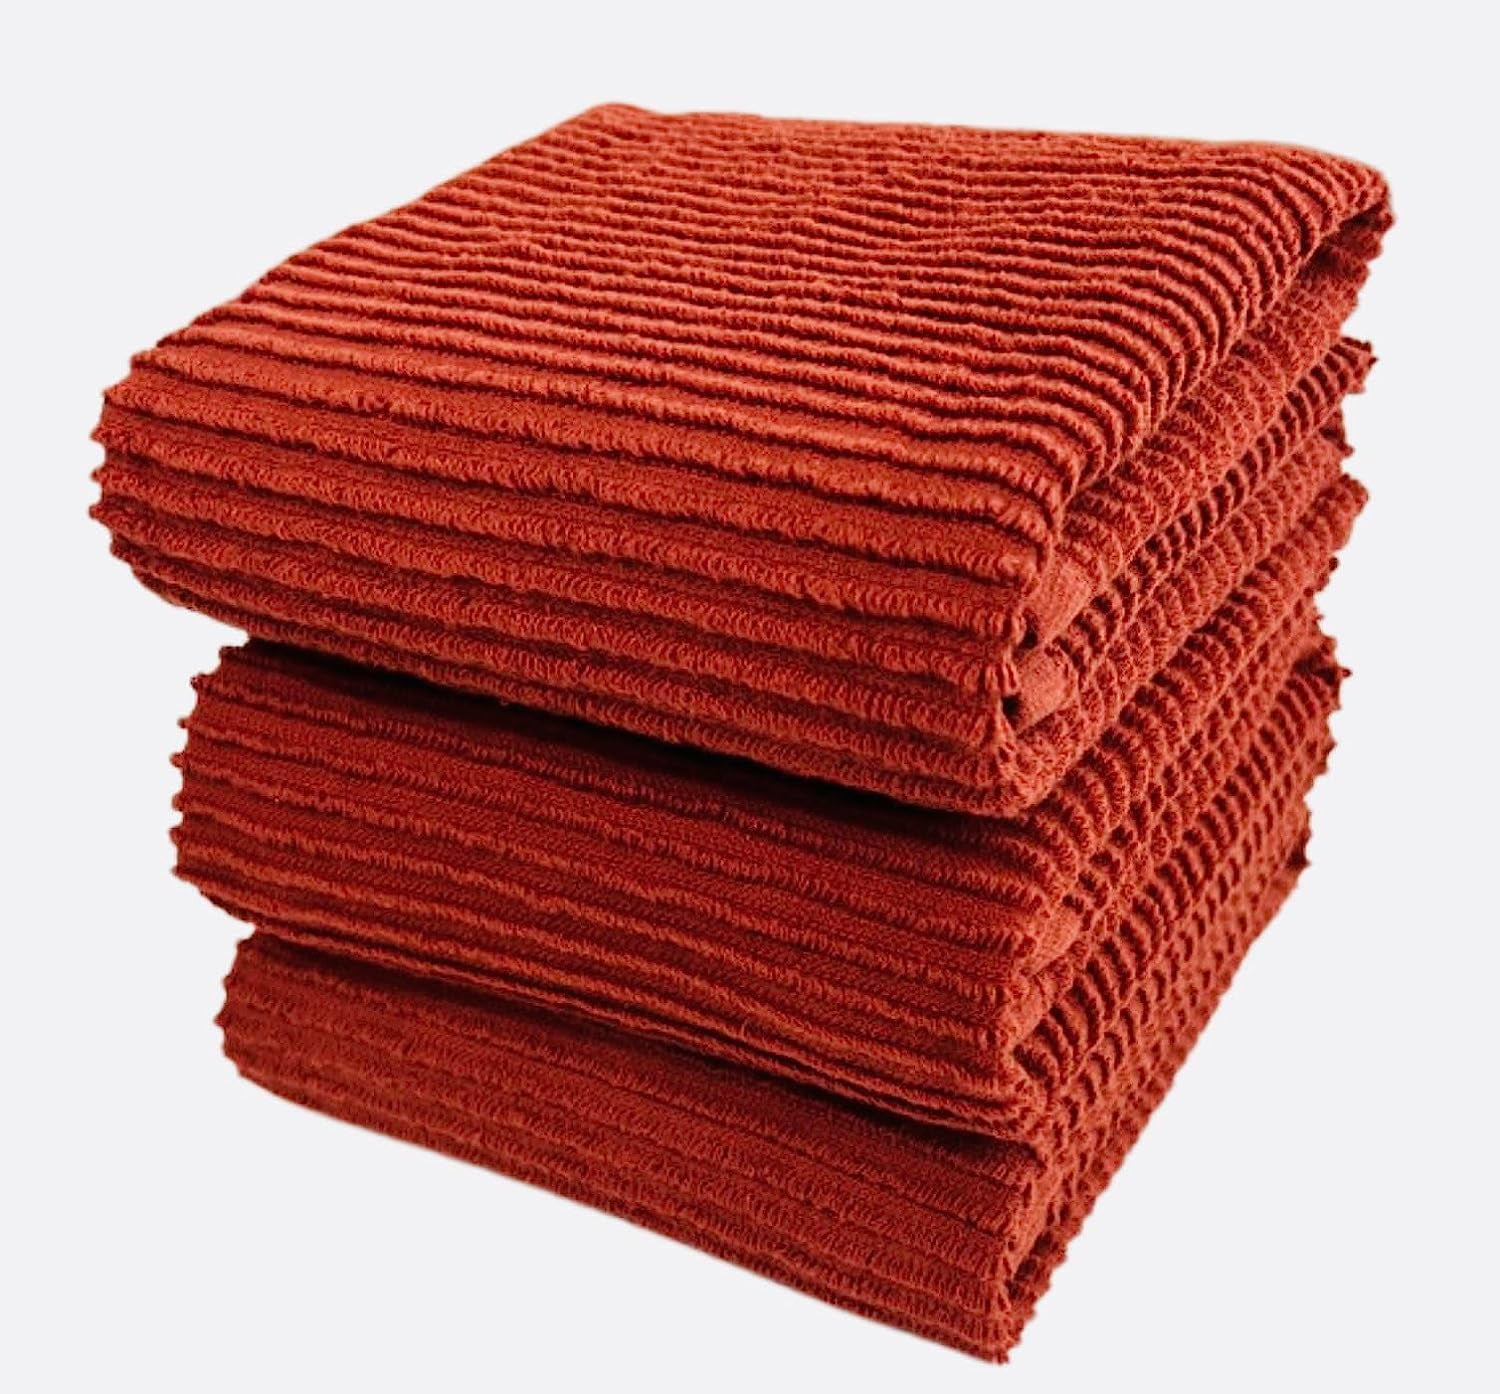 Ross German Cotton Dish Towel, Super Absorbent Orange